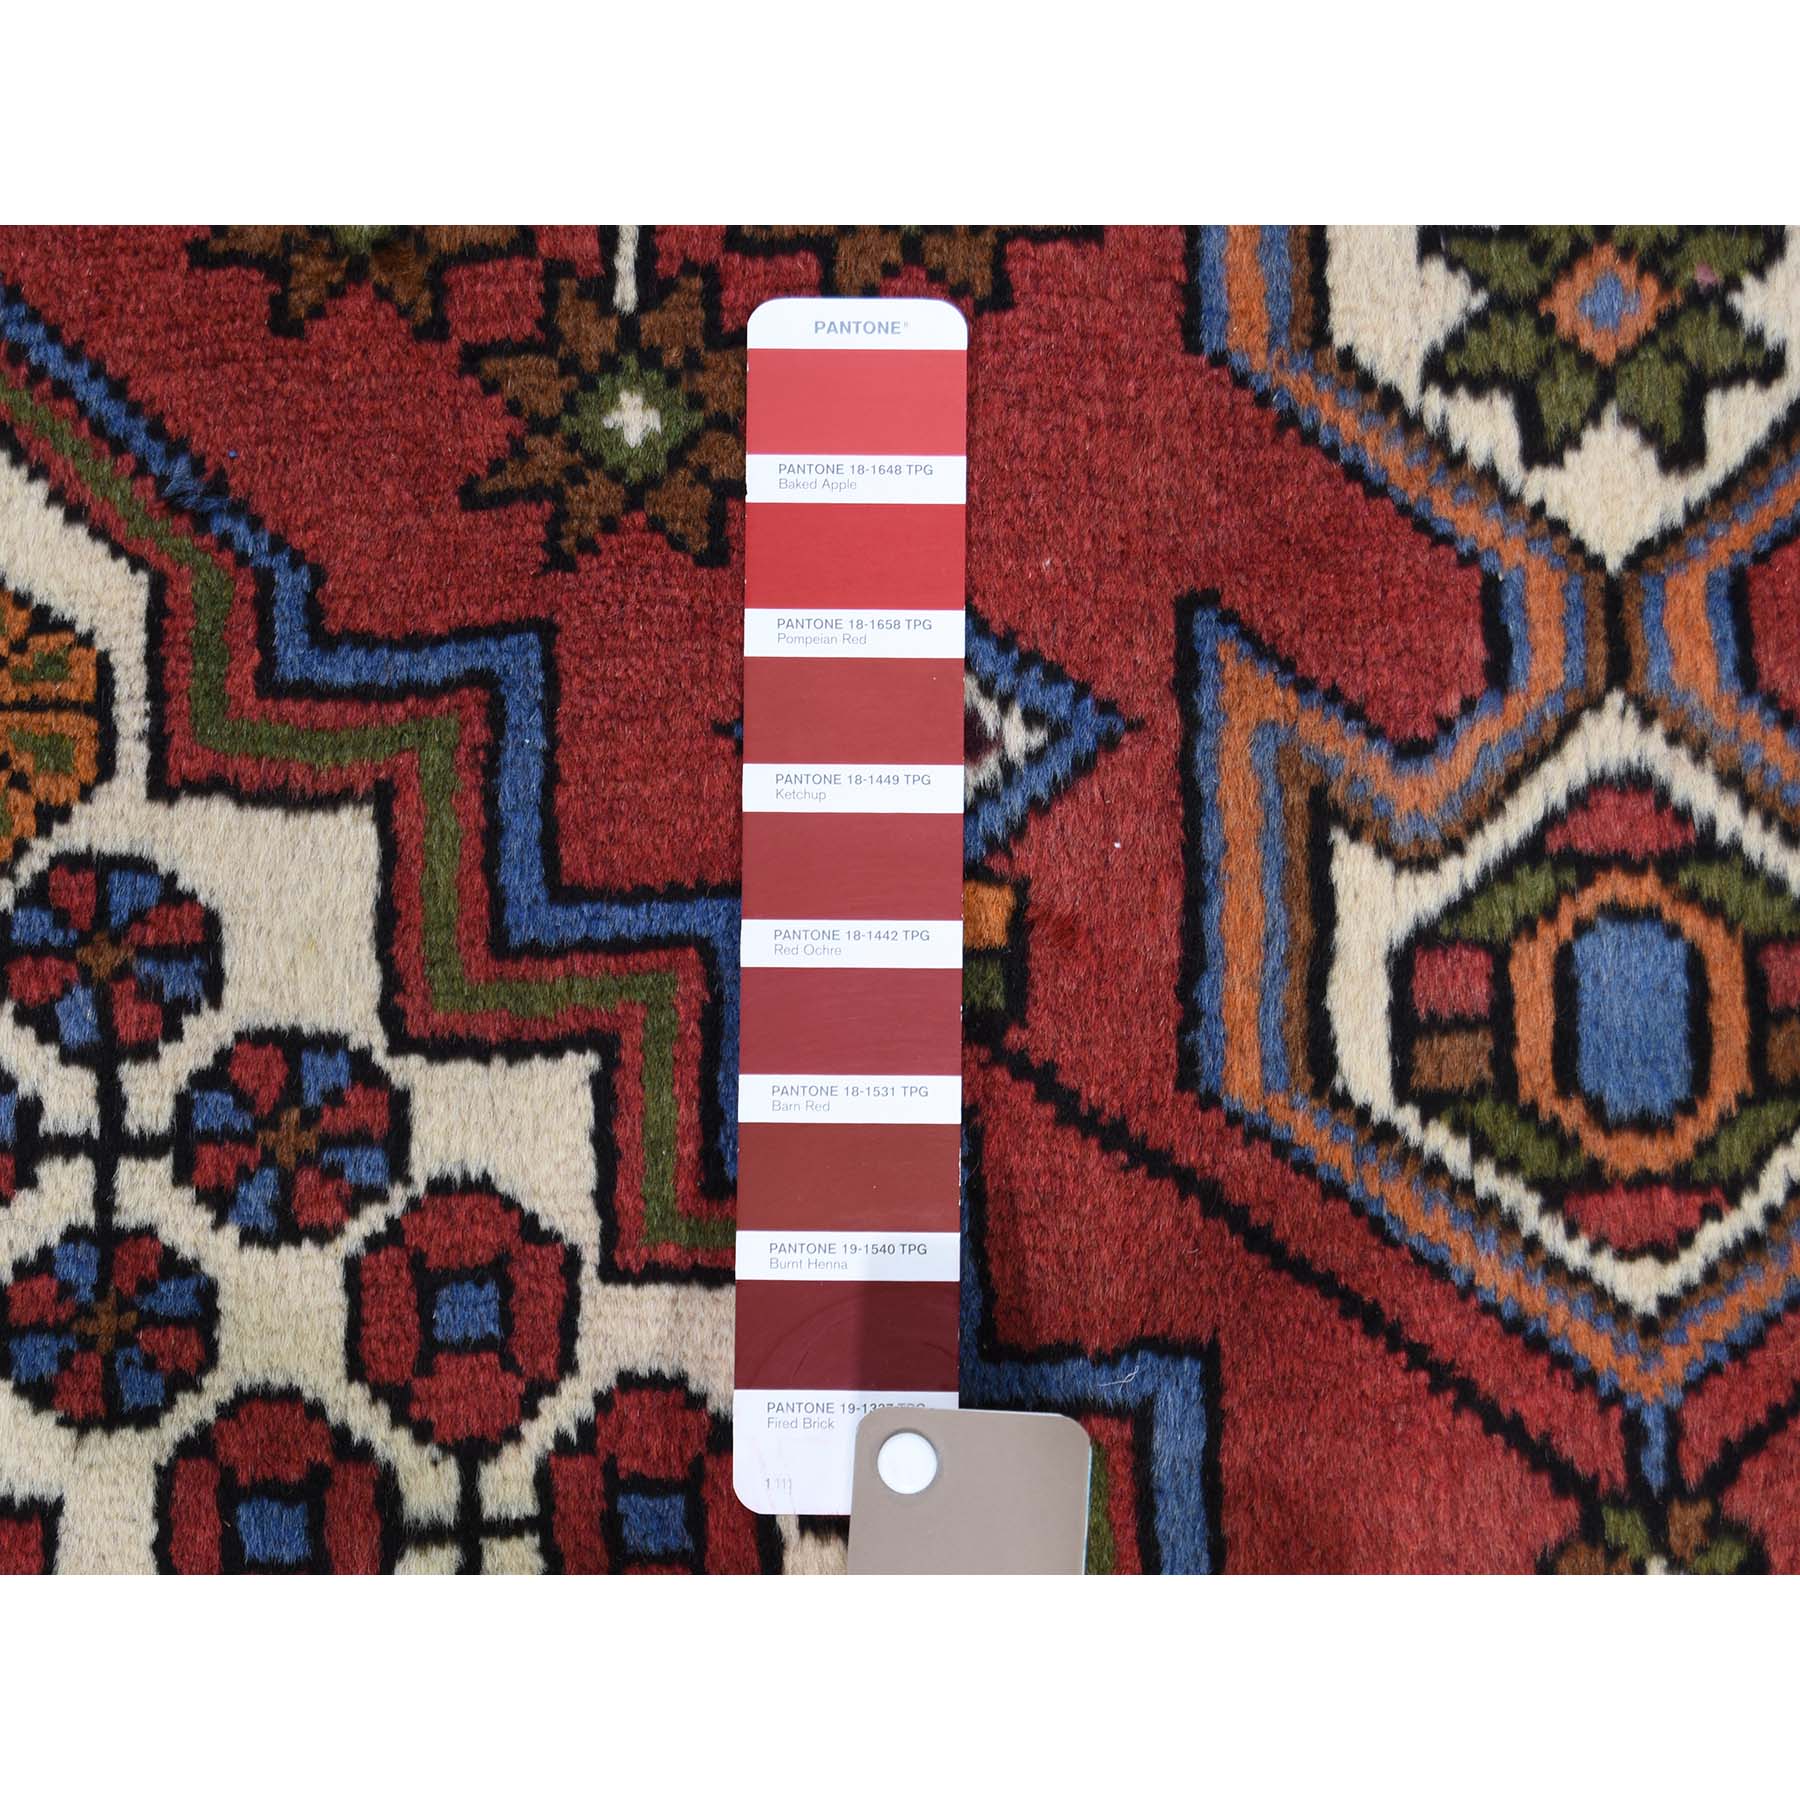 3-5 x5-3  Vintage Persian Hamadan Pure Wool Hand-Knotted Oriental Rug 